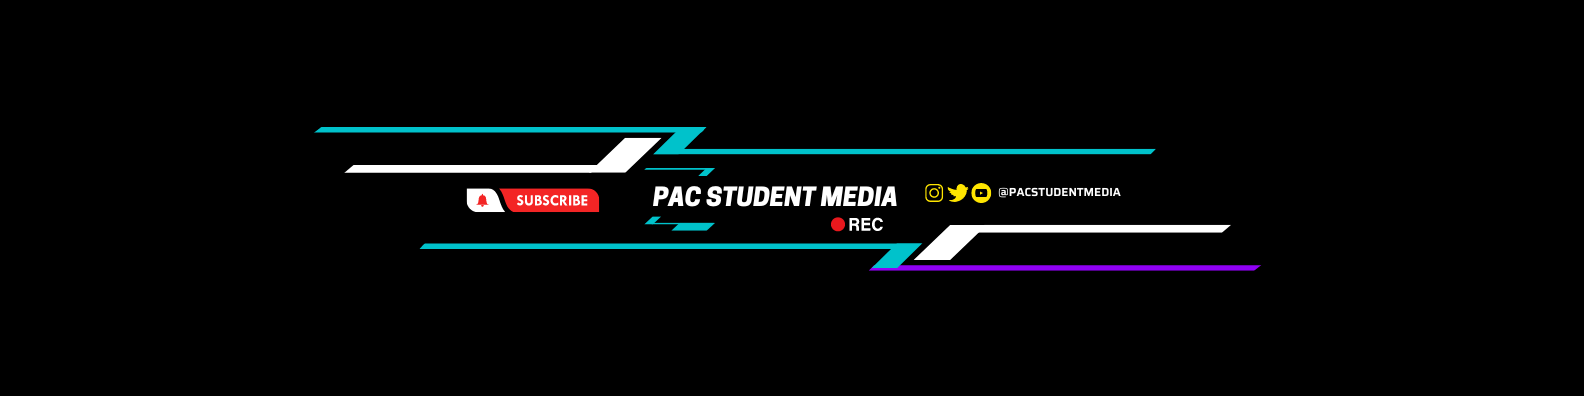 PAC Student Media